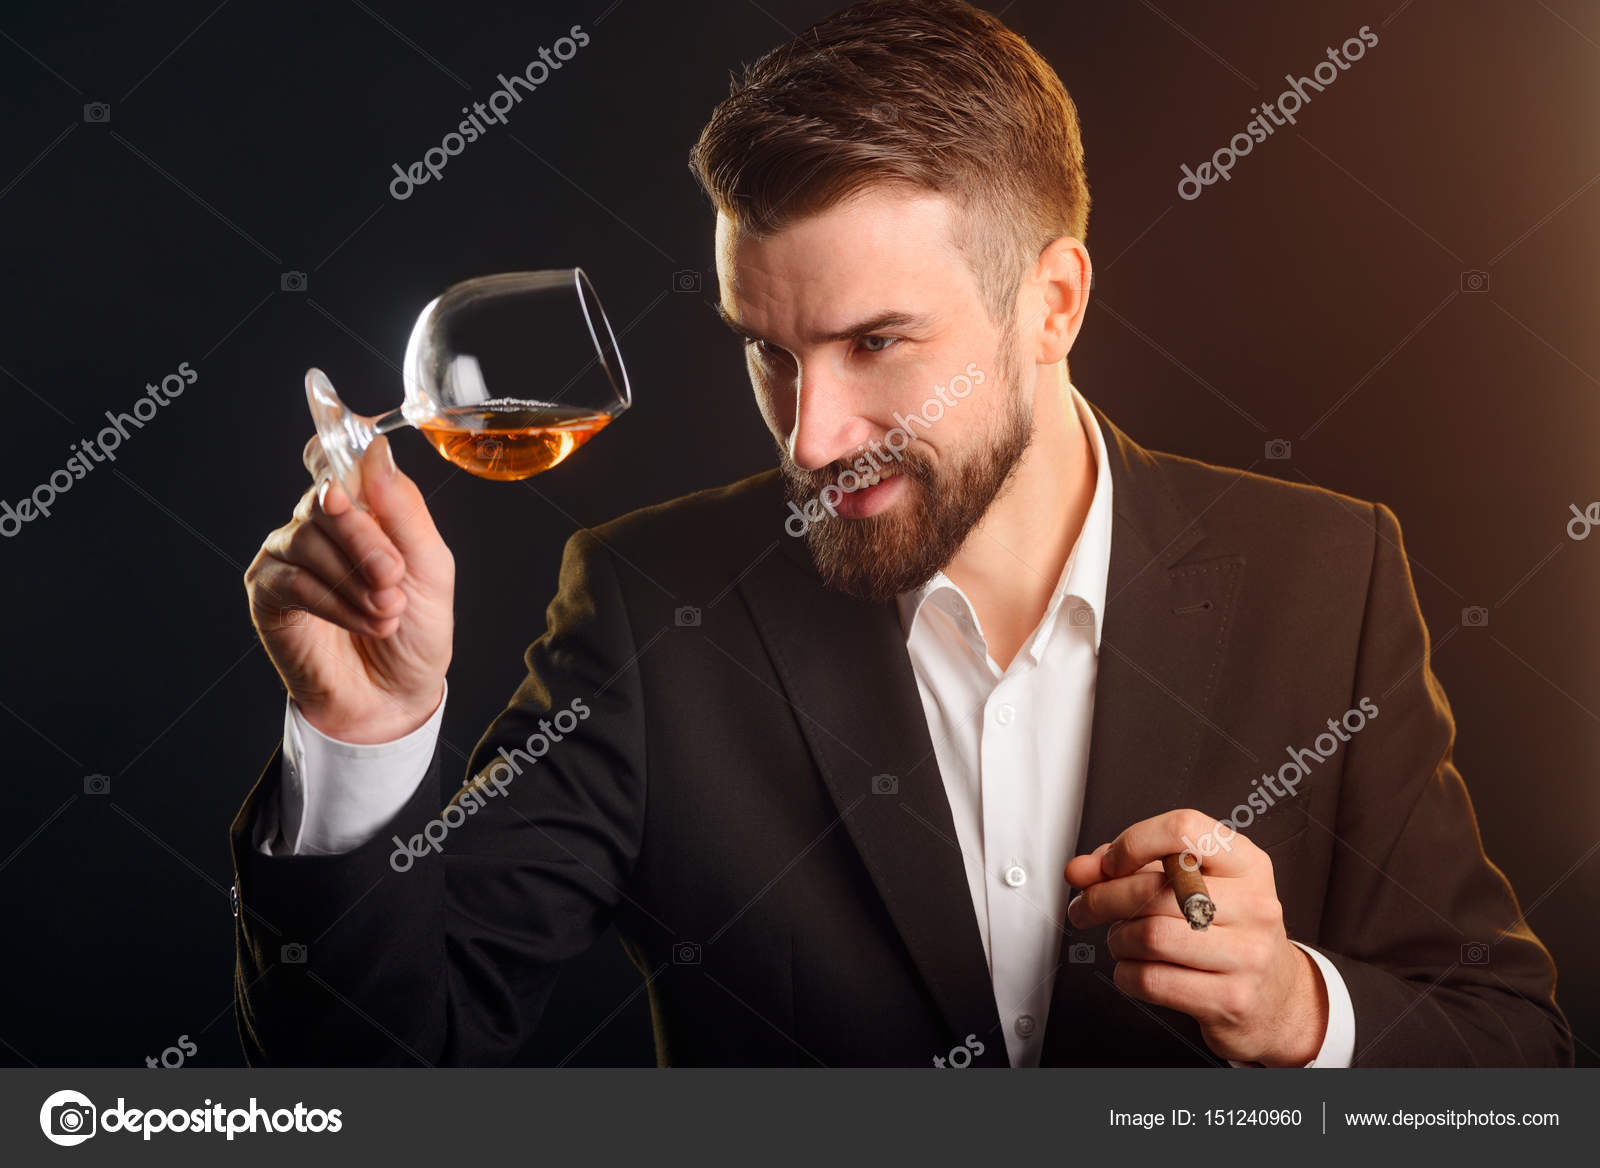 depositphotos_151240960-stock-photo-man-holding-cognac-glass-stylish.jpg